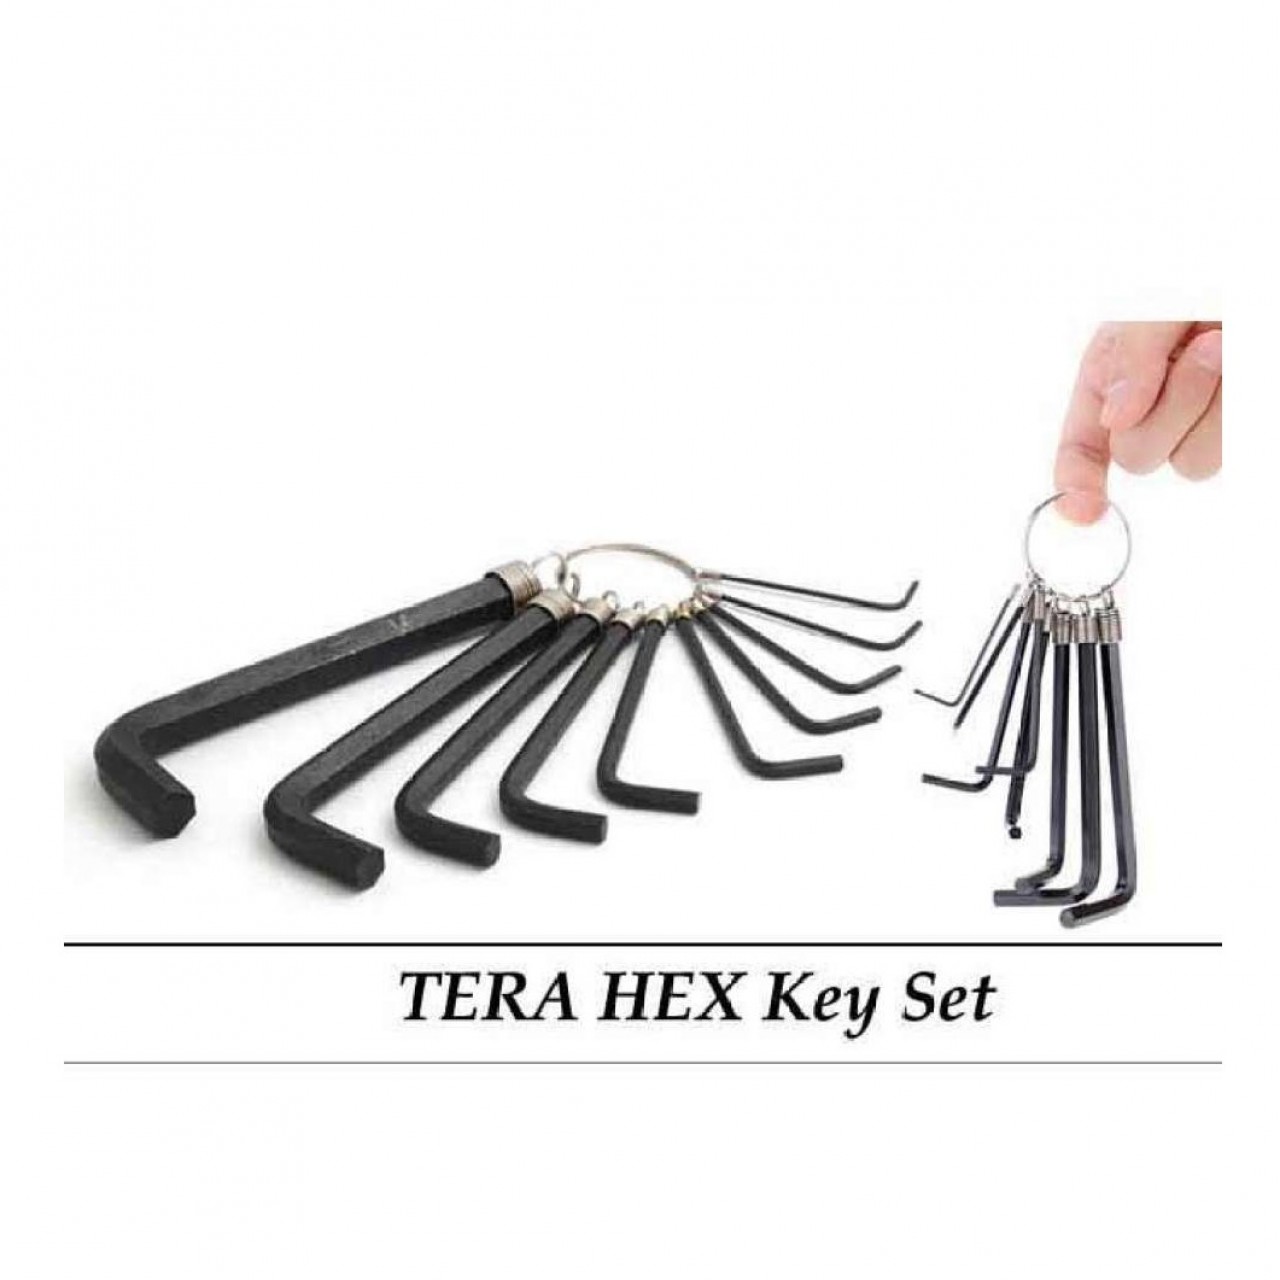 10 Pieces- Tera Hex Key (L-Keys) - Black